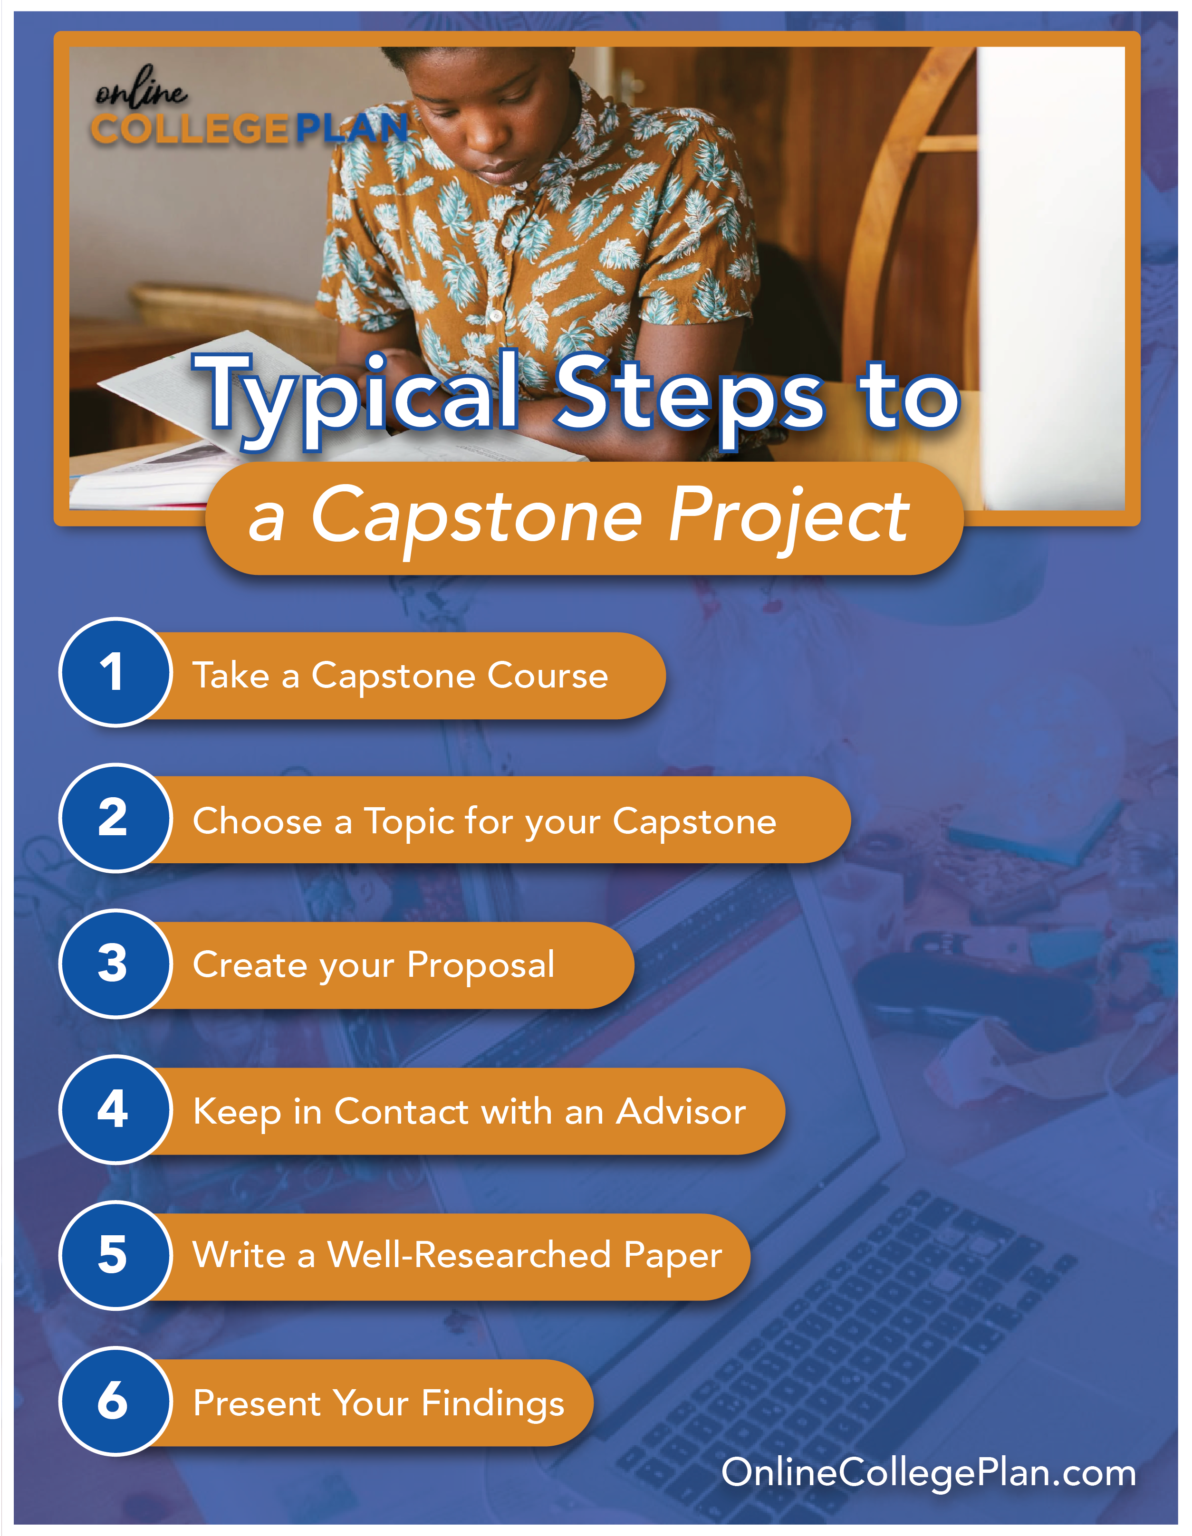 capstone project course outcomes